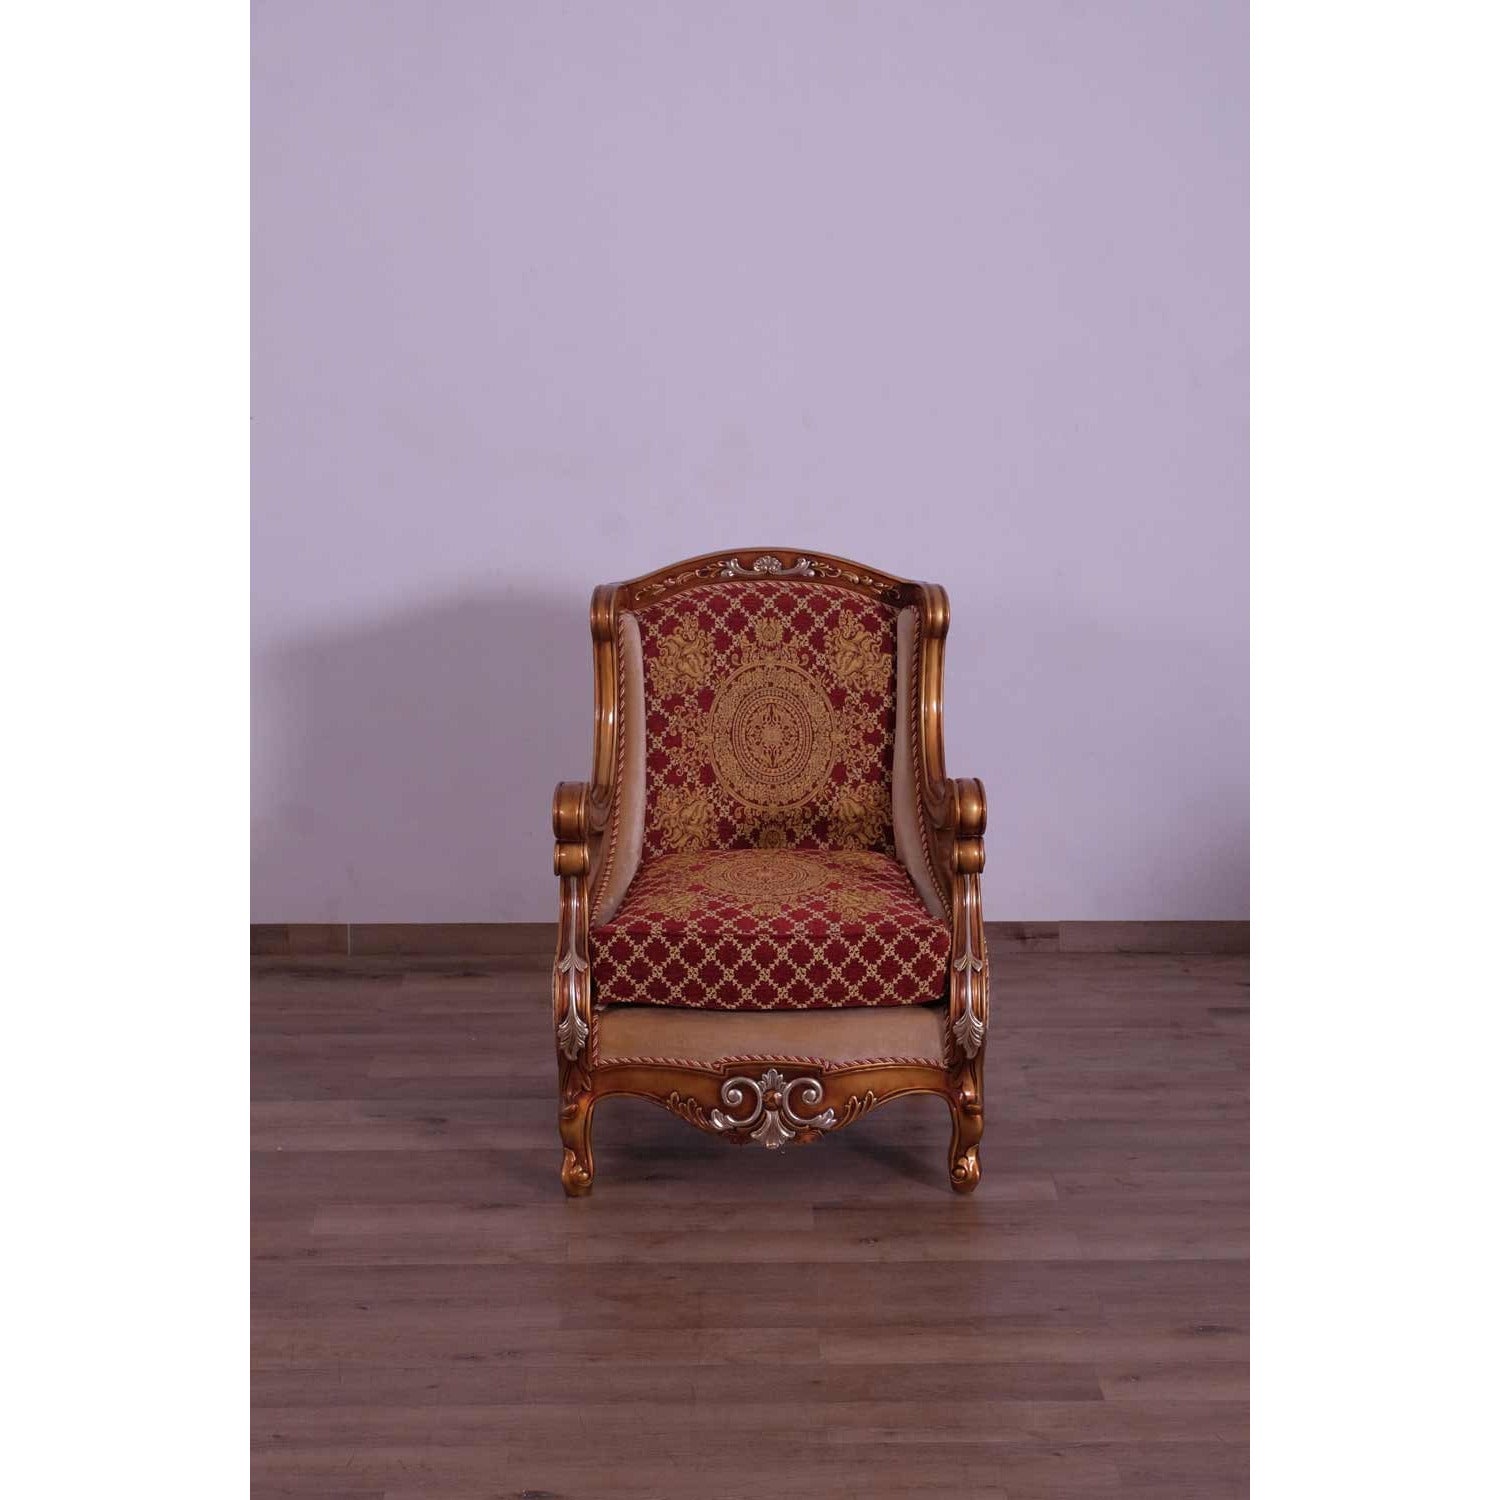 European Furniture - Raffaello III Luxury Chair in Red & Gold - 41022-C - New Star Living